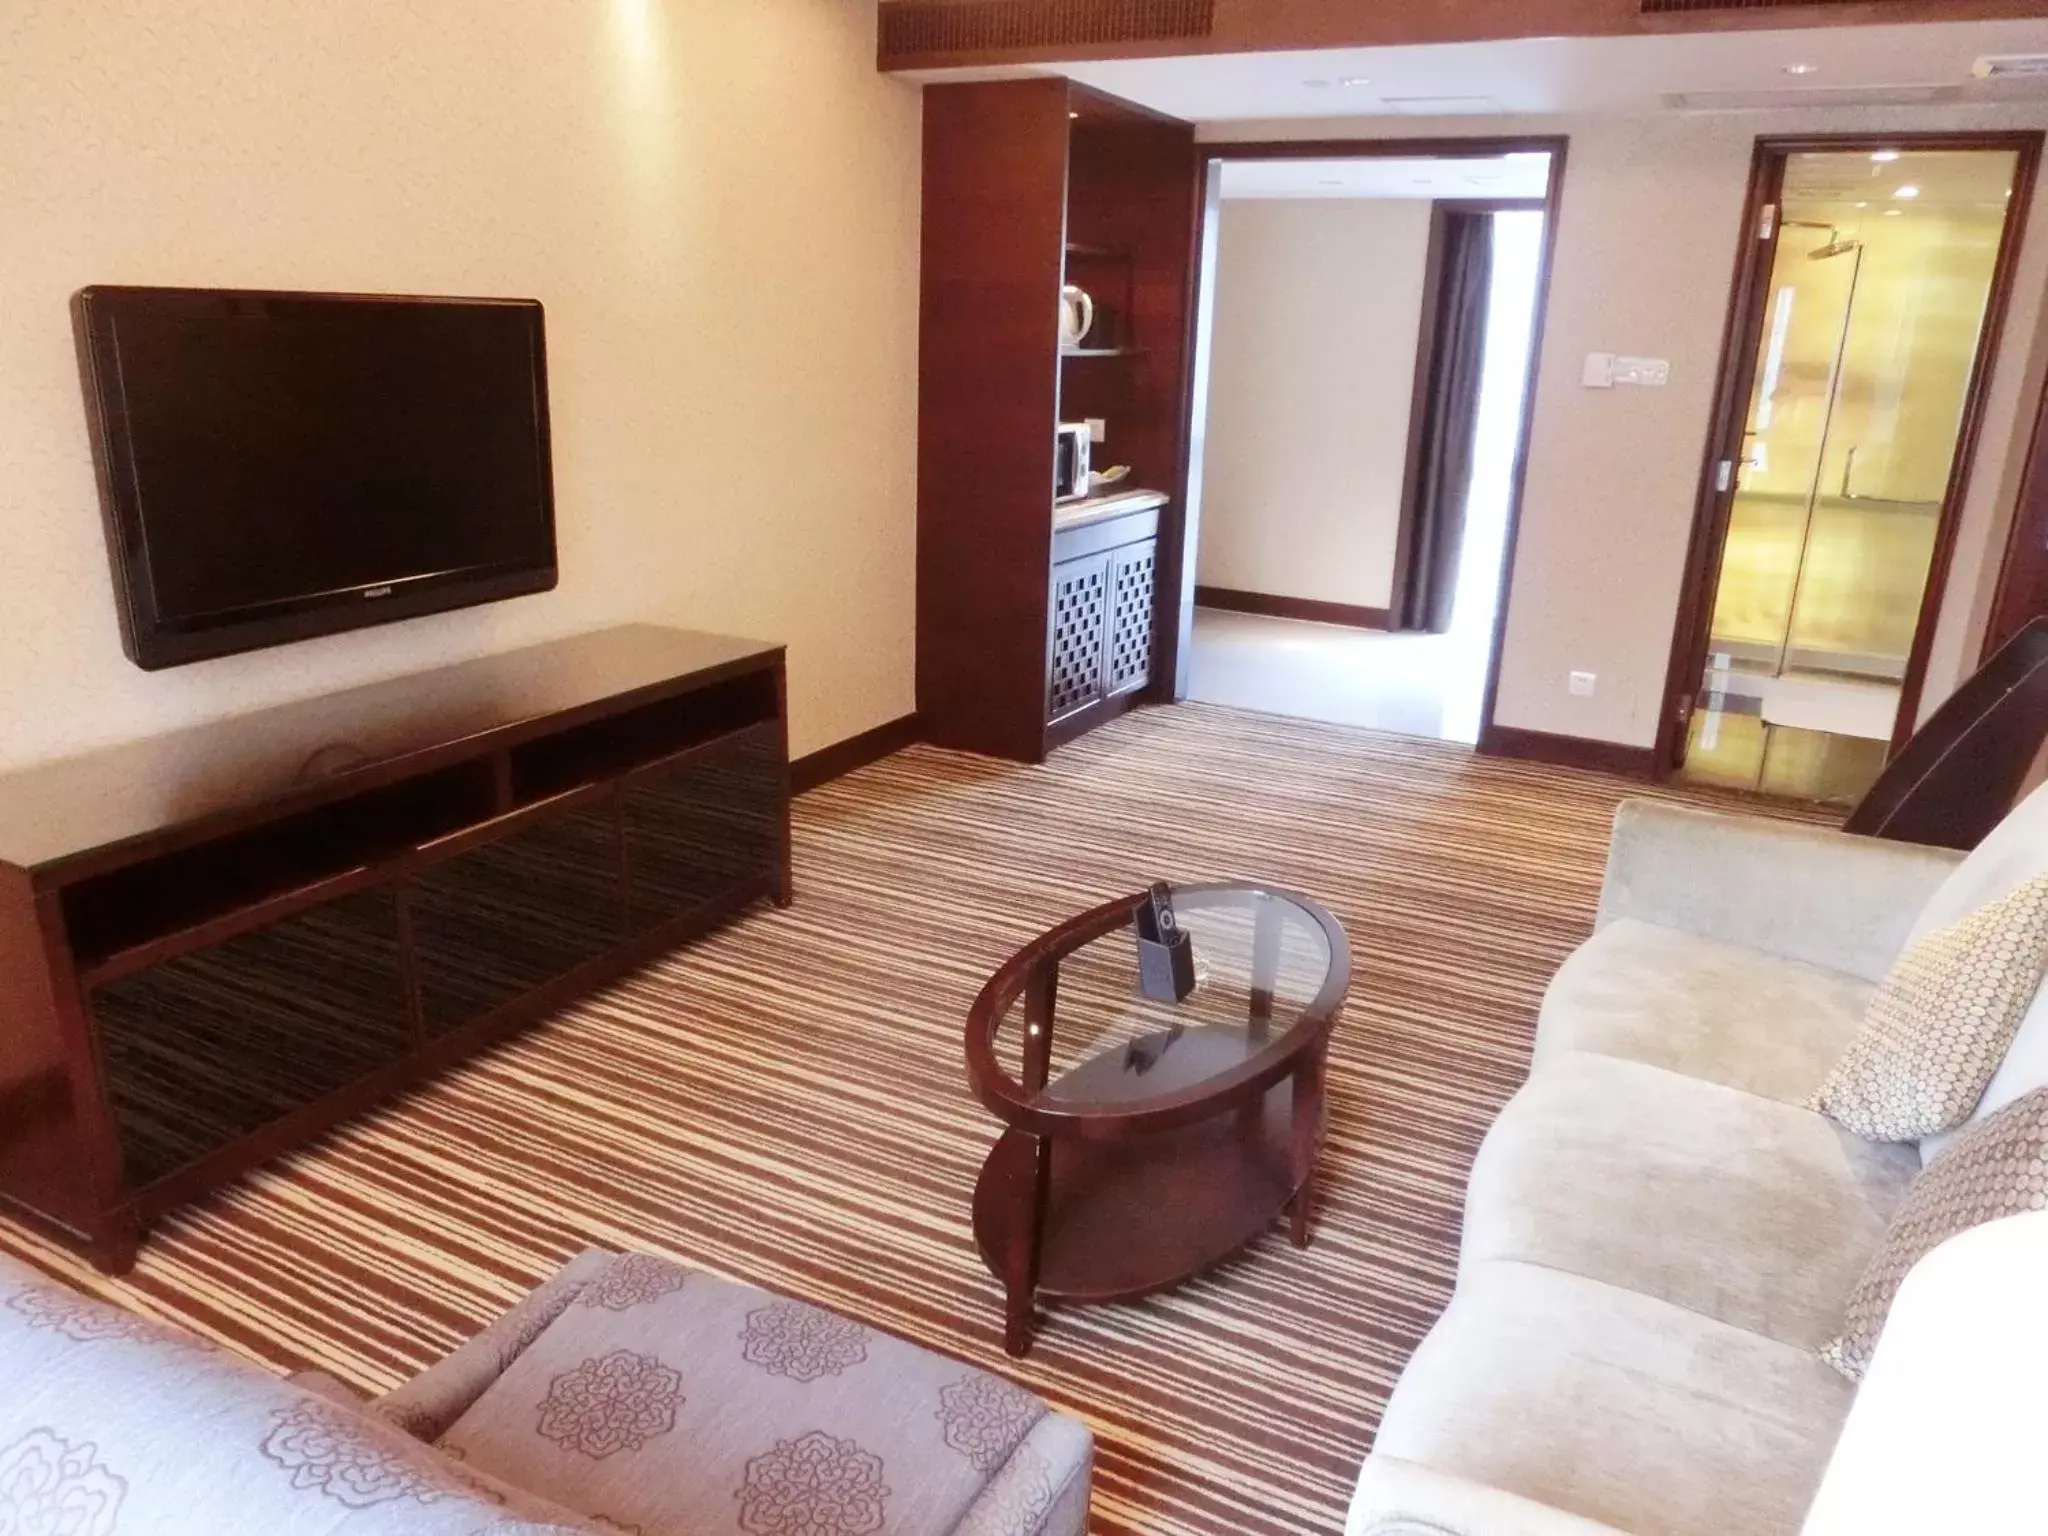 TV and multimedia, Seating Area in Leeden Hotel Guangzhou